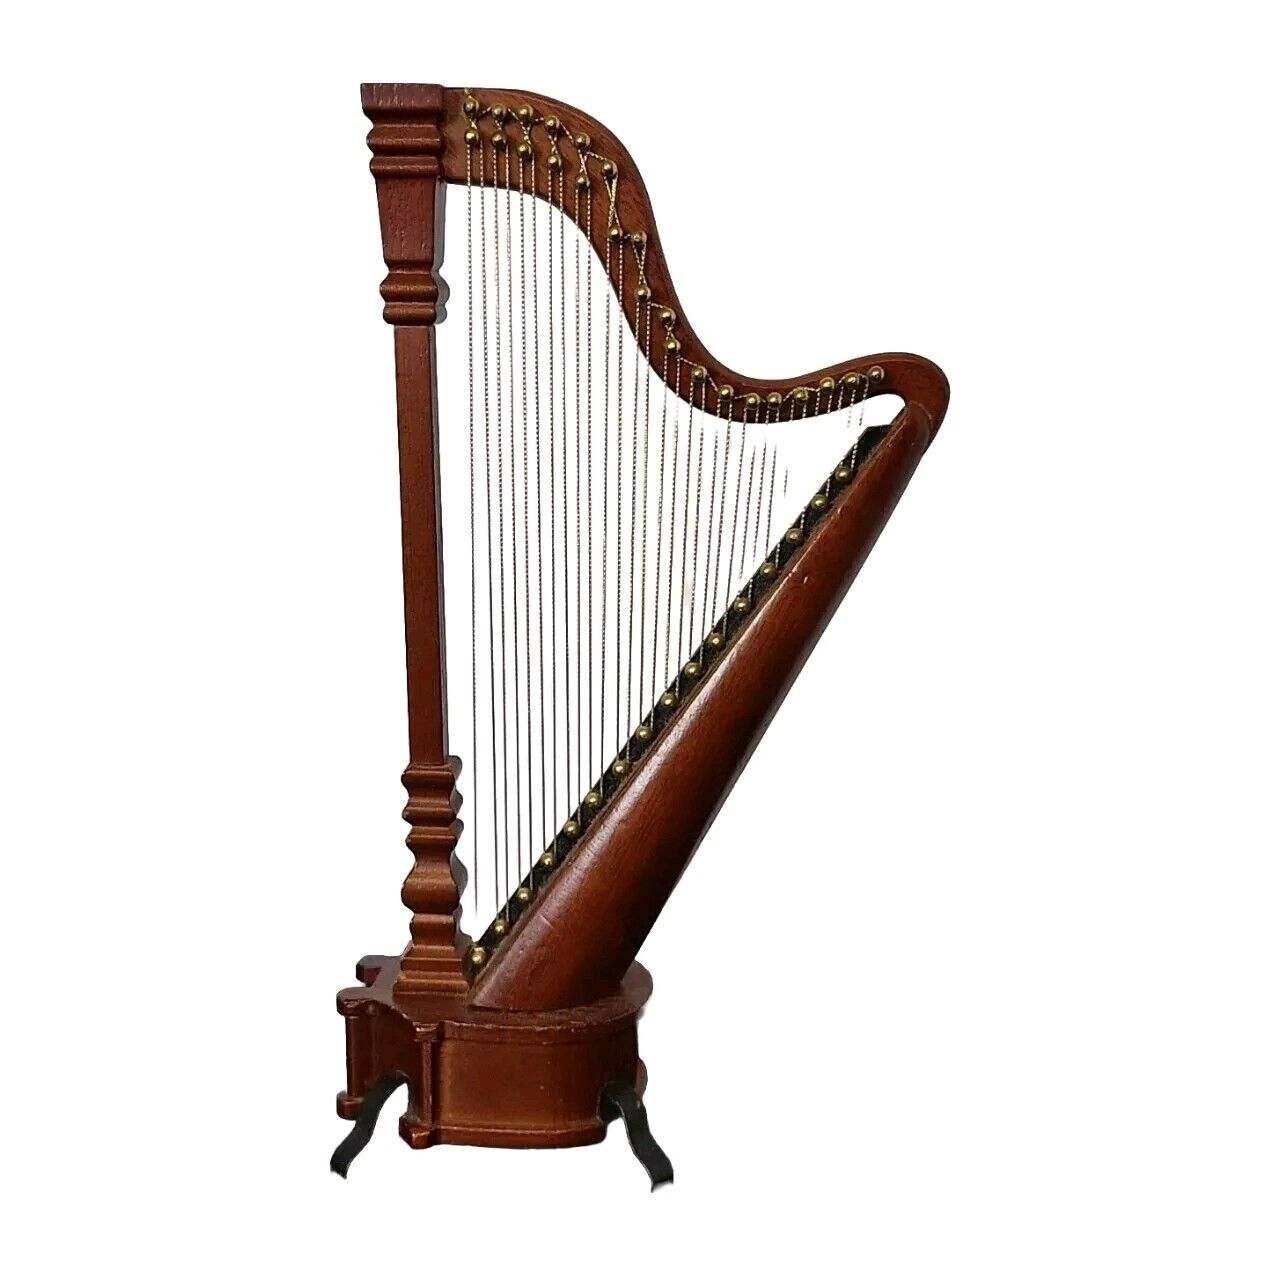 San Francisco Music Box Company - Wooden Harp Music Box